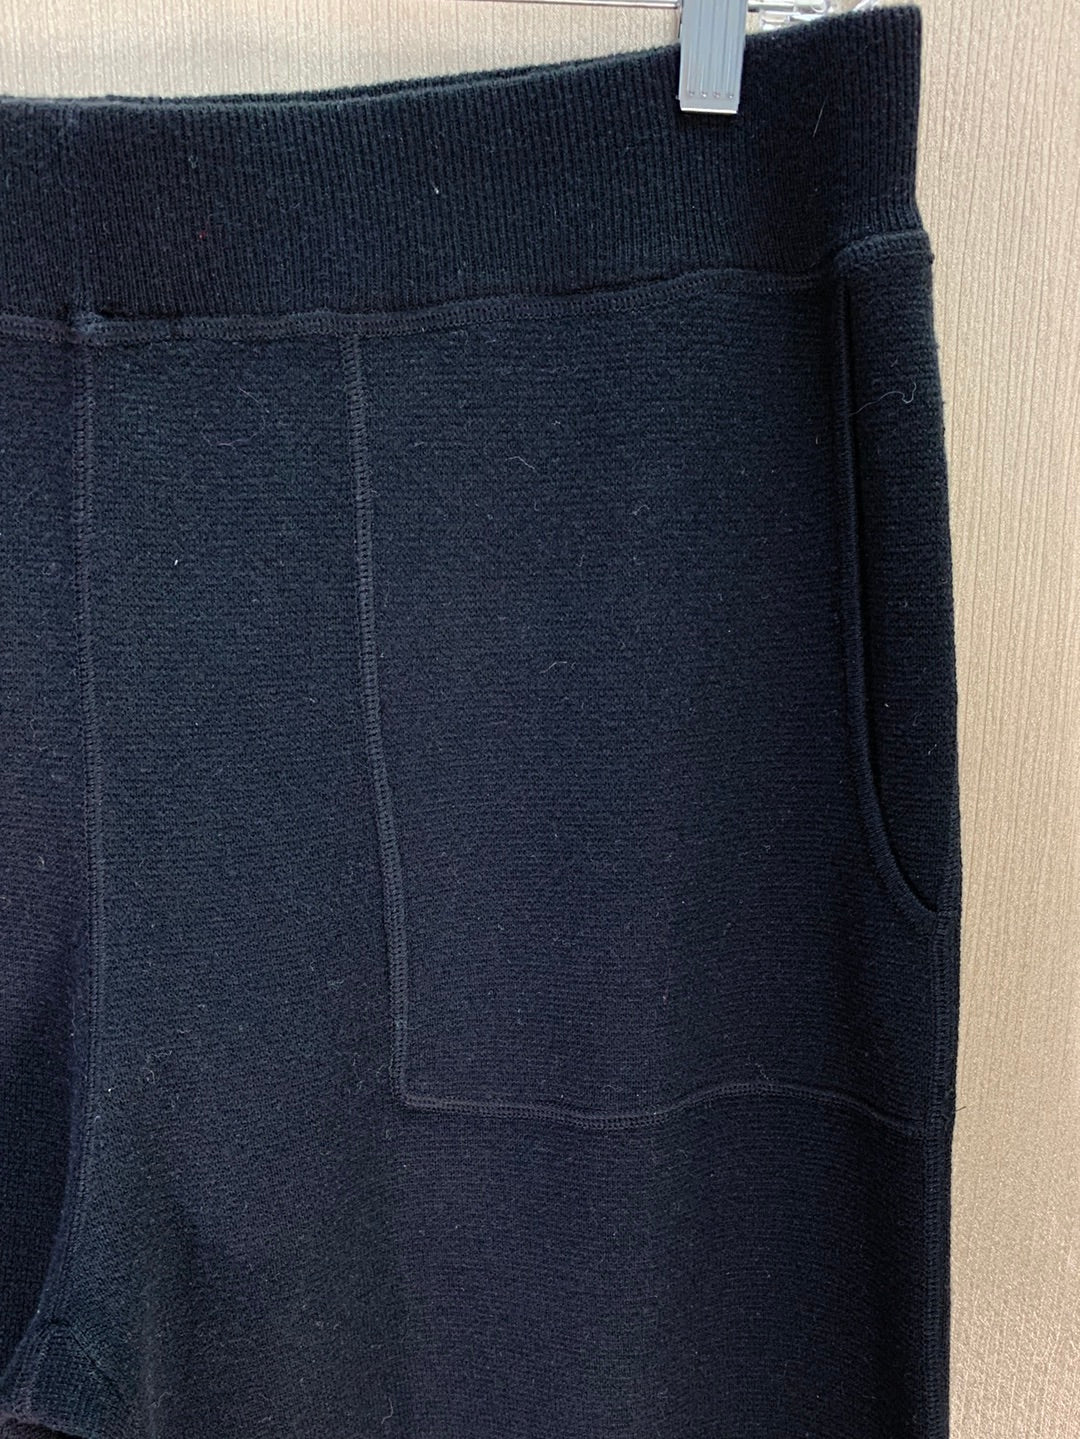 NWT - J. CREW black Wool Cotton Pull On Wide Leg Sweater Pants - XL